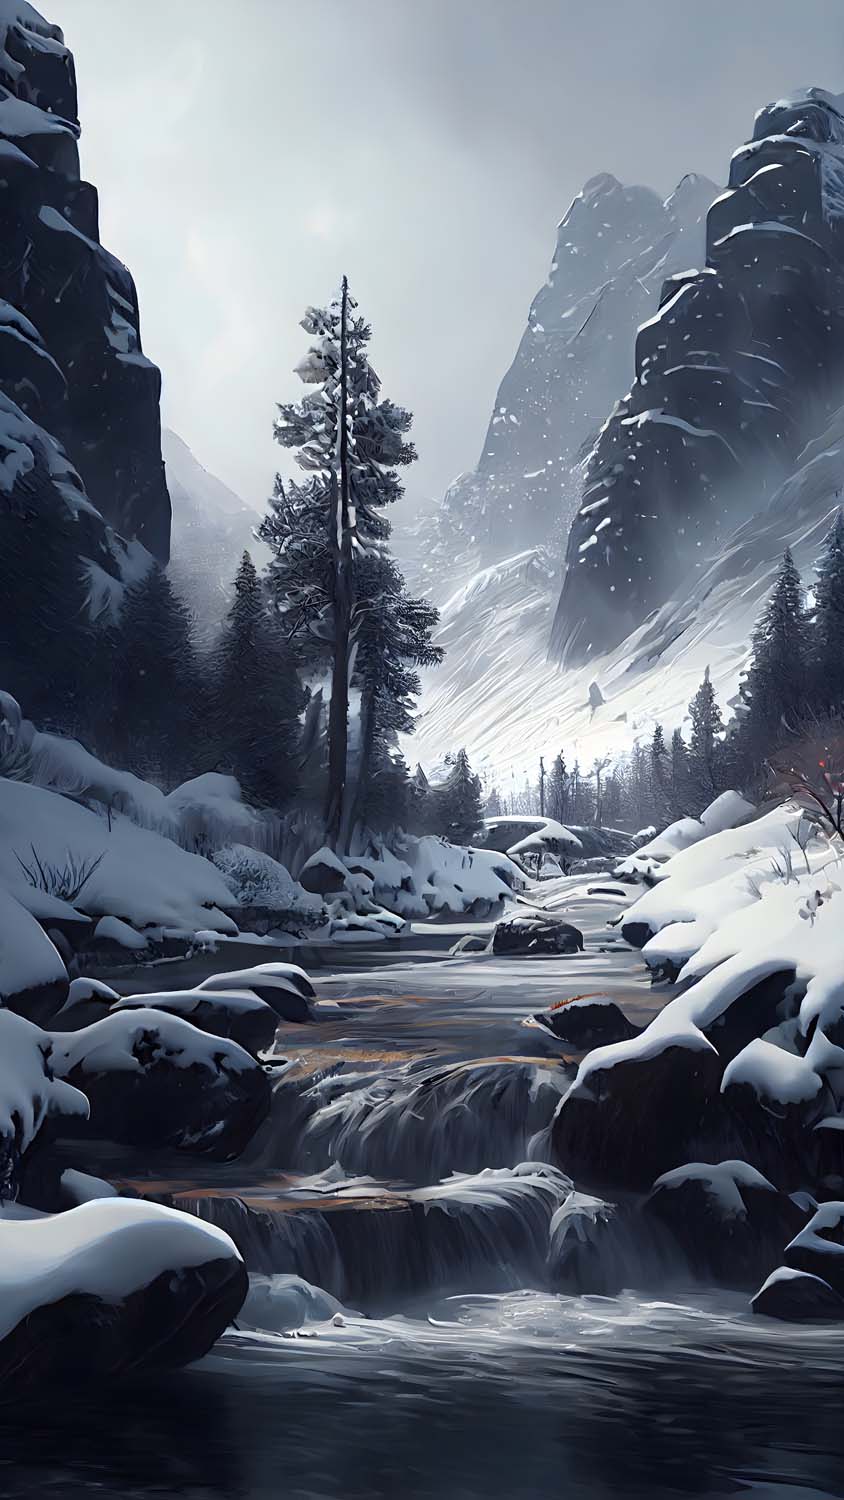 iPhoneXpapers.com | iPhone X wallpaper | mz23-snow -winter-wood-mountain-sky-star-night